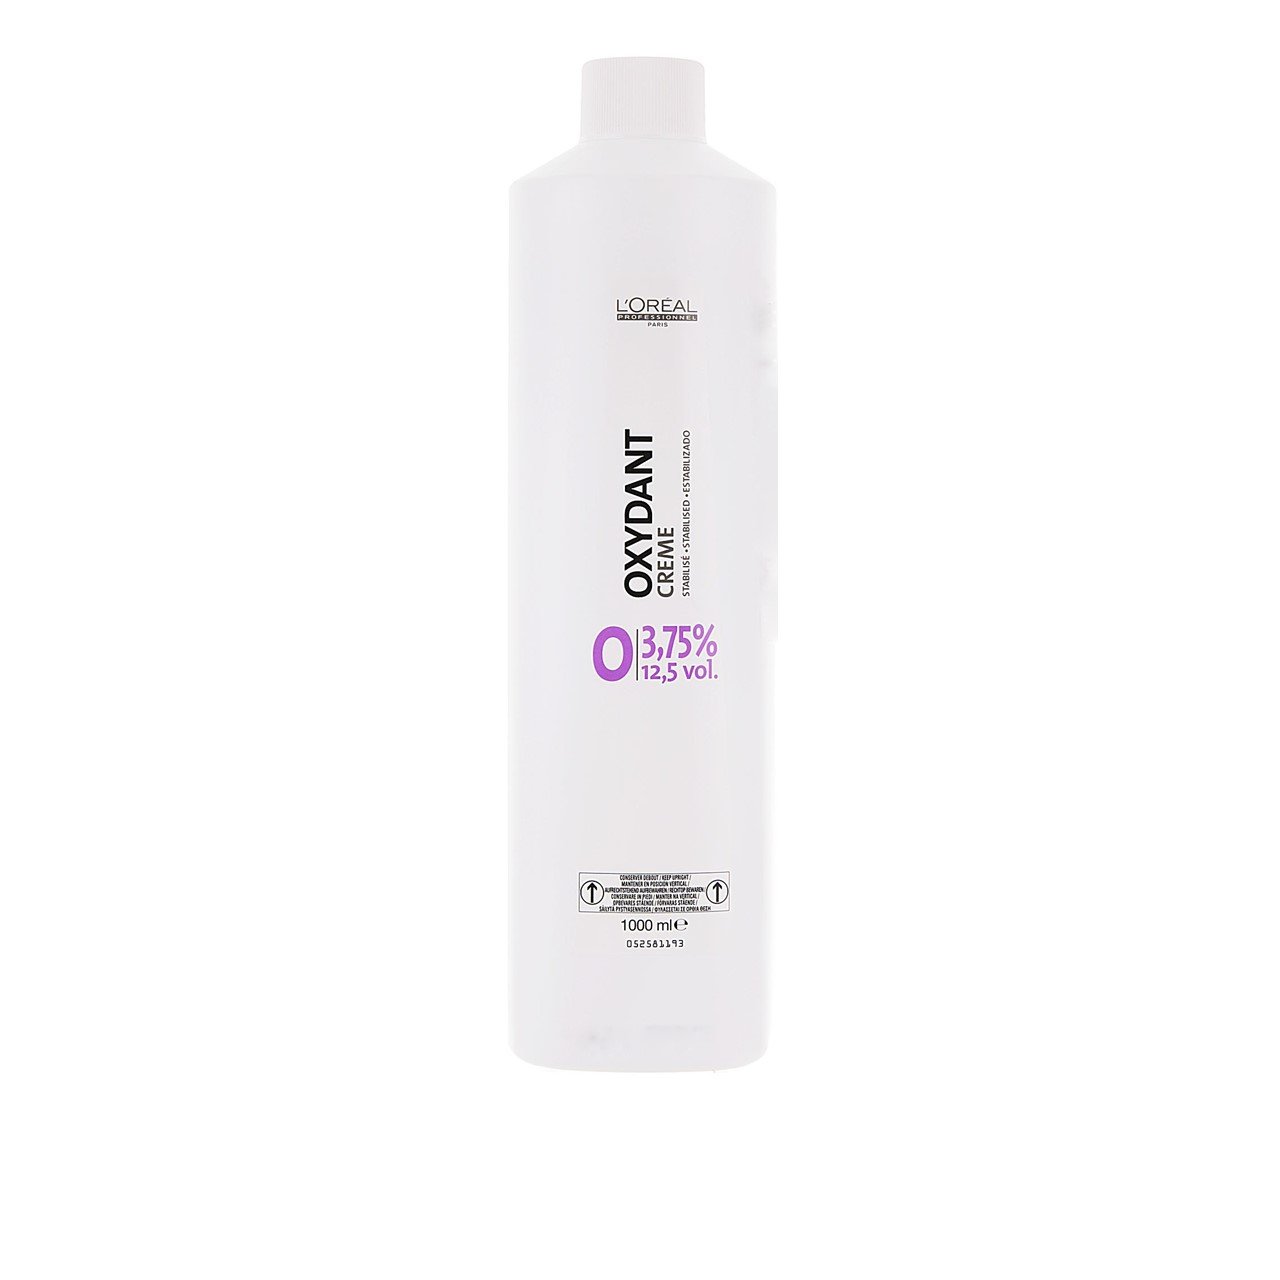 L'Oréal Professionnel Oxydant Cream 0 3.75% 12.5 Vol. 1L (33.81 fl oz)